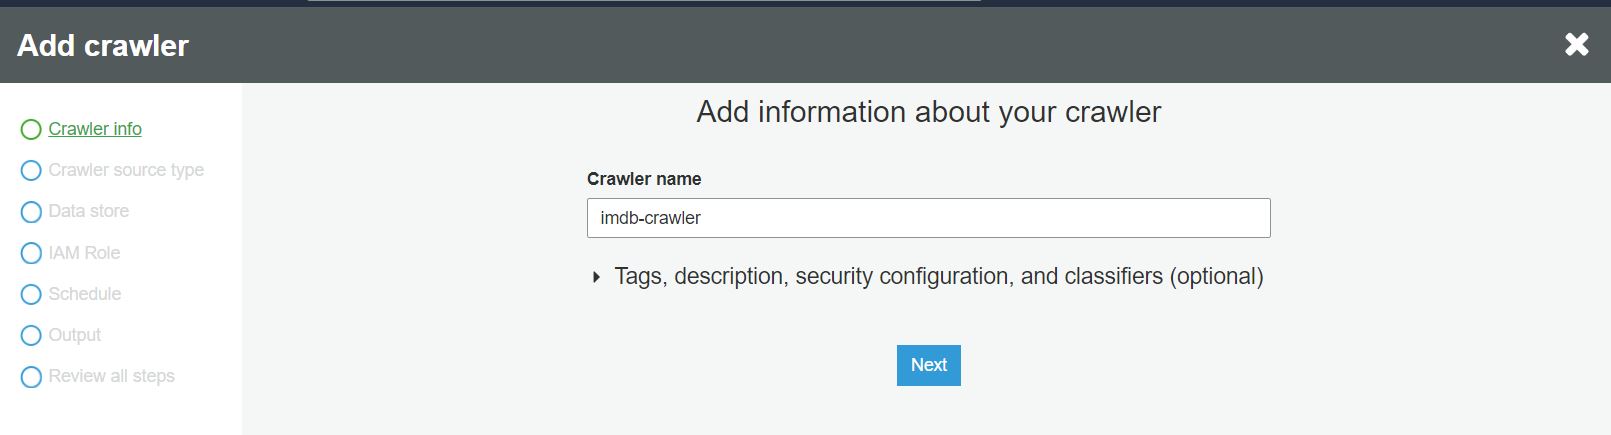 Crawler info